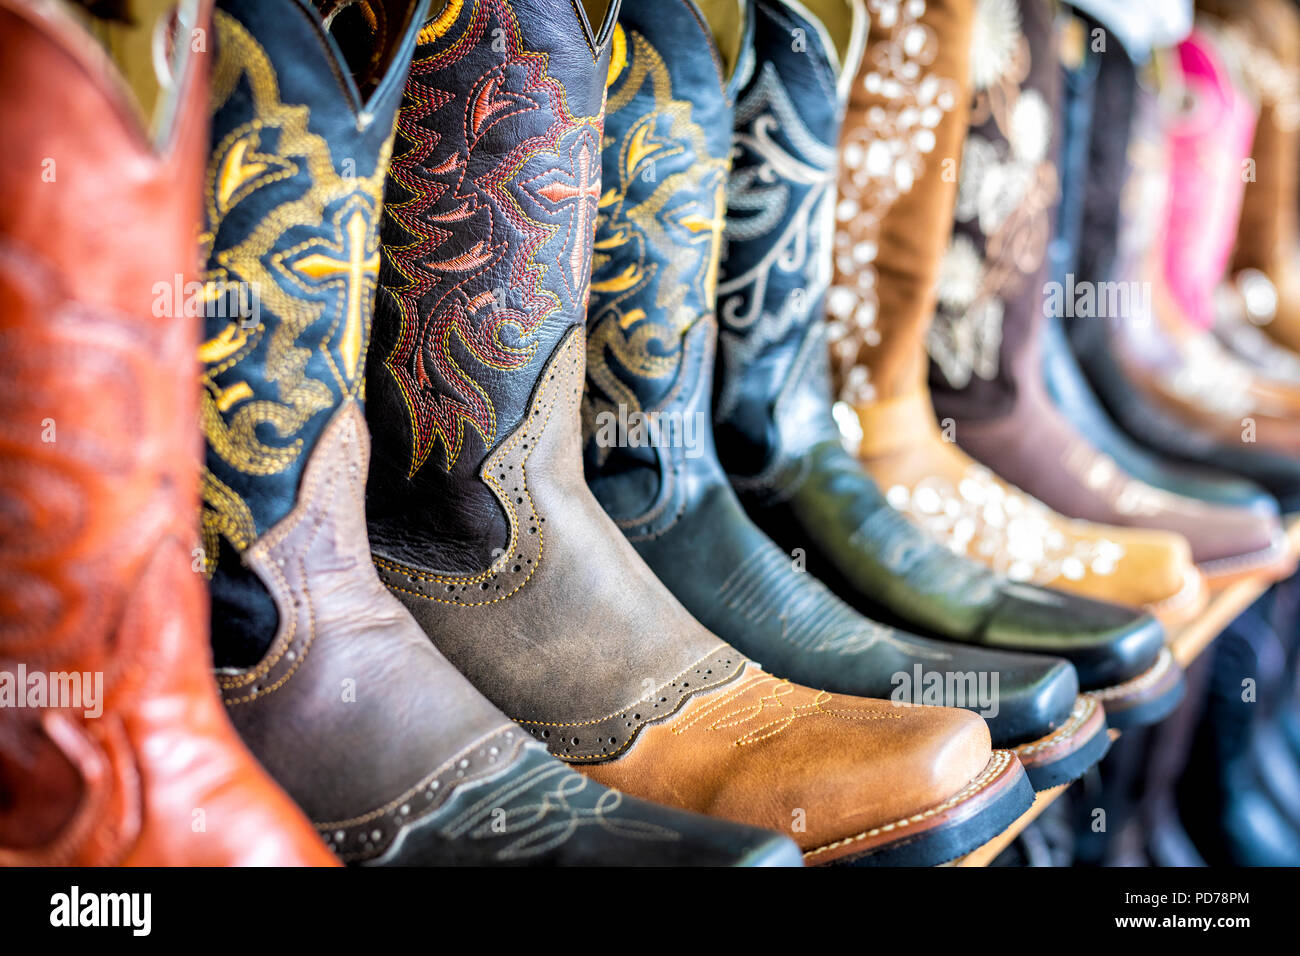 A variety of cowboy boots in the San Juan de Dios market of Guadalajara, Jalisco, Mexico. Stock Photo